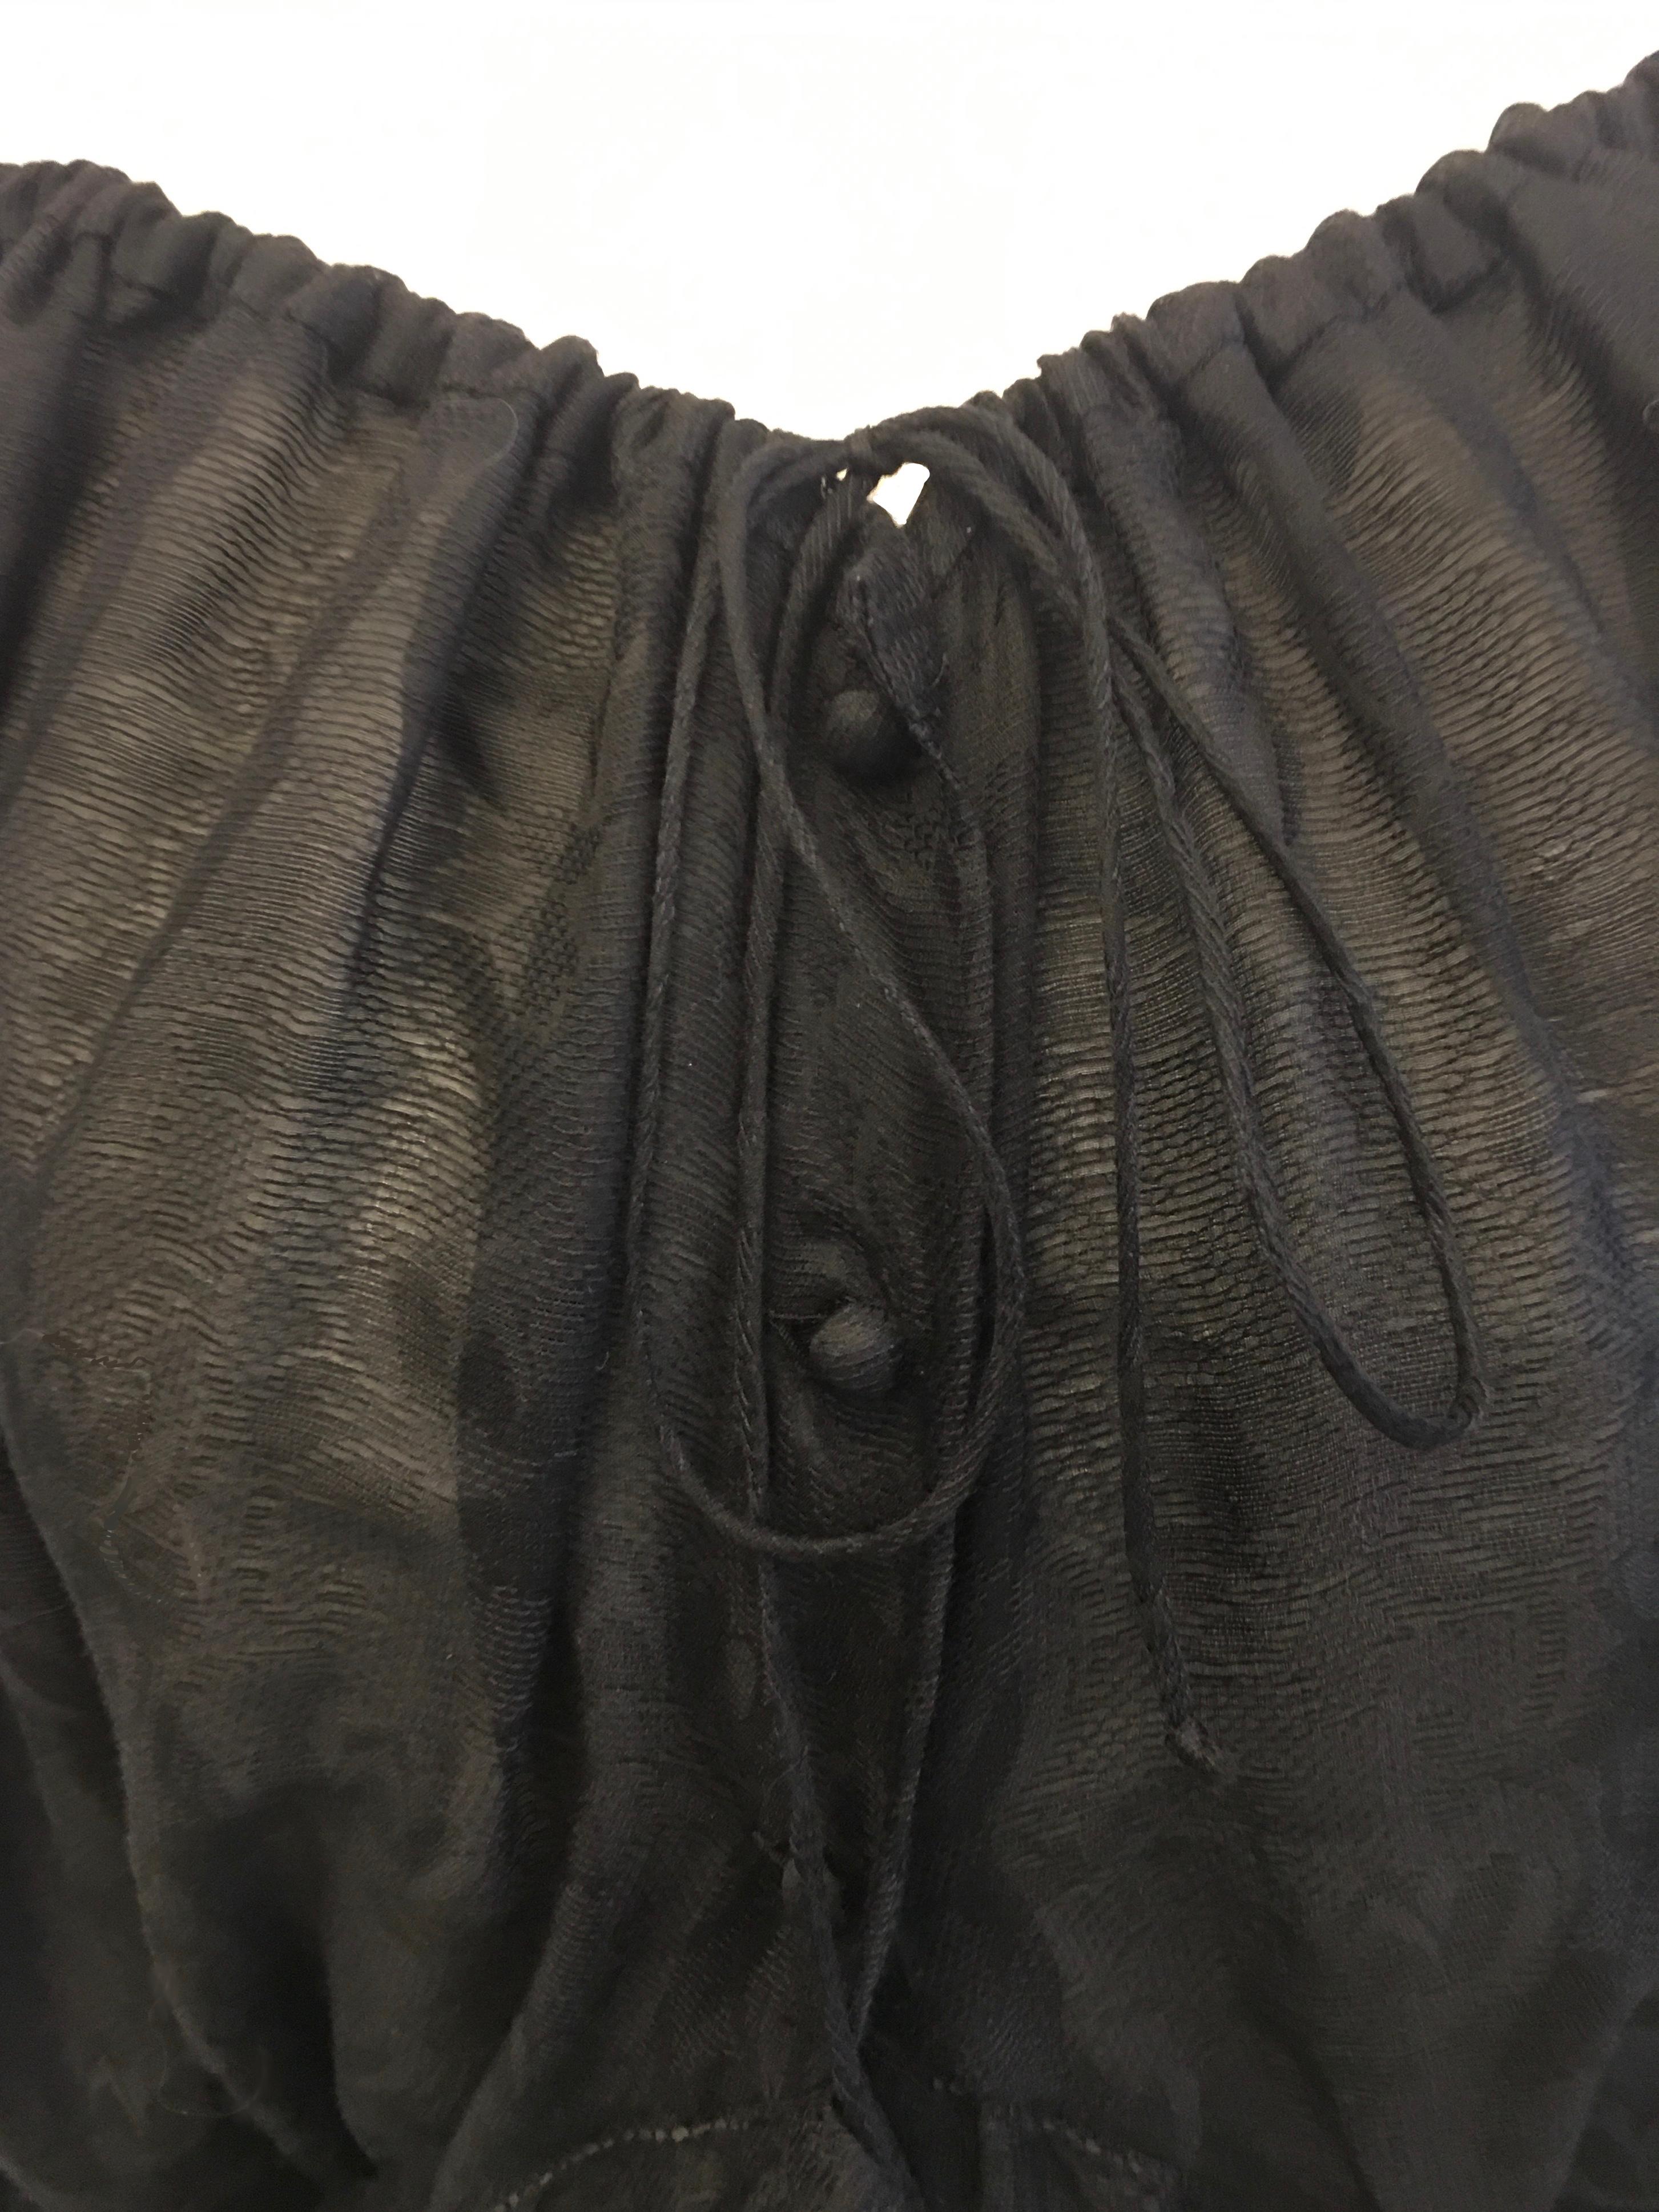 JOHN GALLIANO Black cotton-silk jacquard fabric blouse from the SS 2010 season For Sale 2